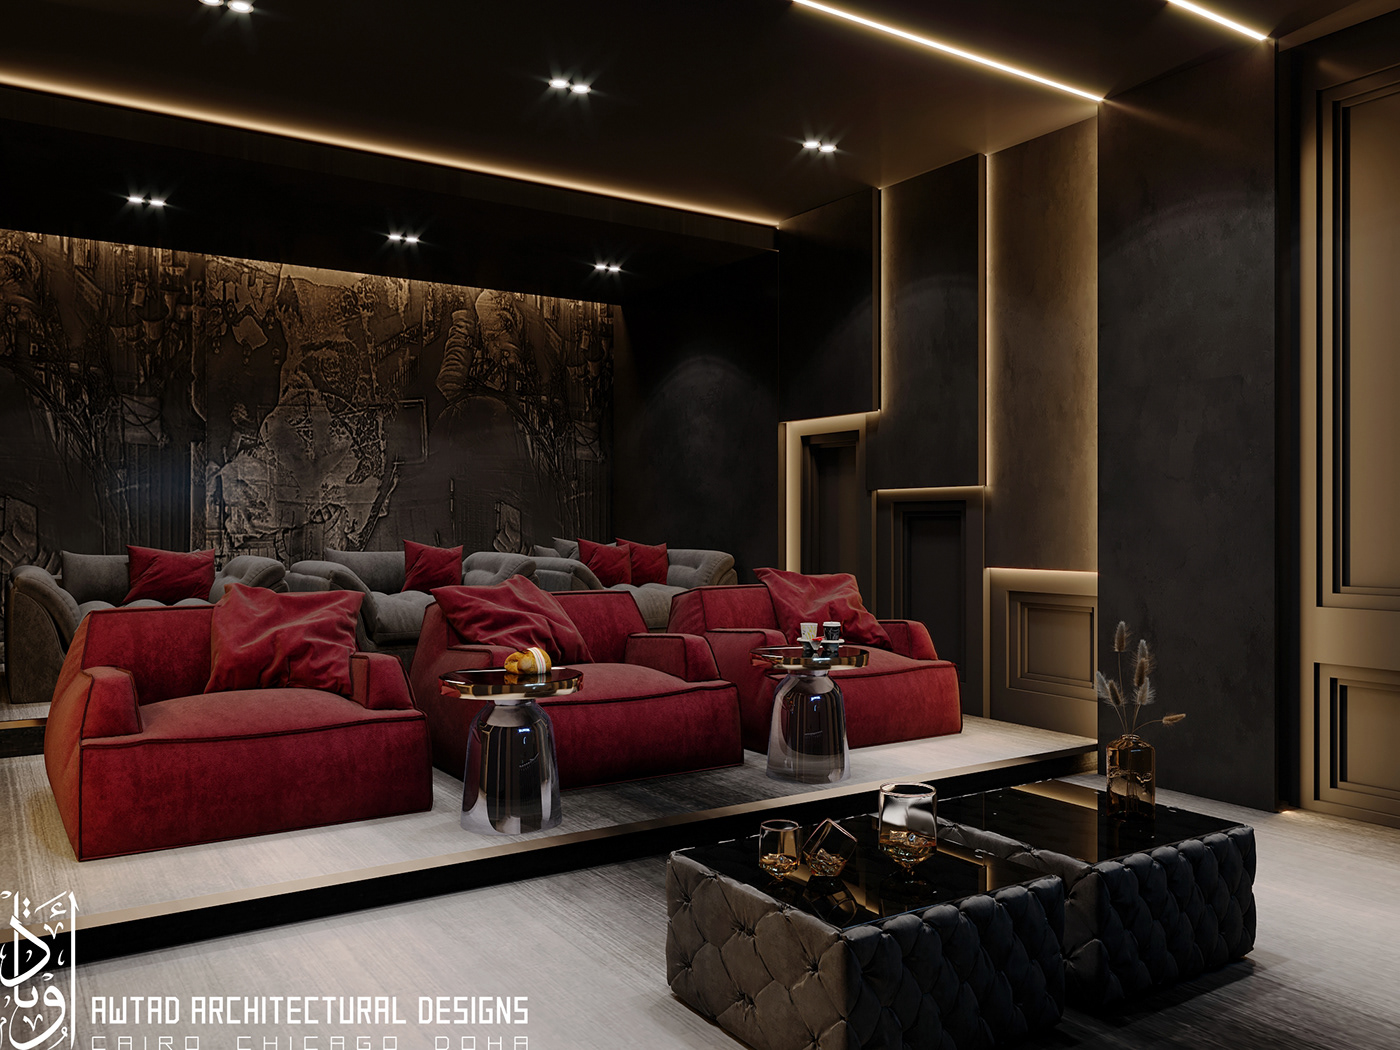 architecture corona designs home Interior luxurious photoshop Render Cinema homecinema theater 